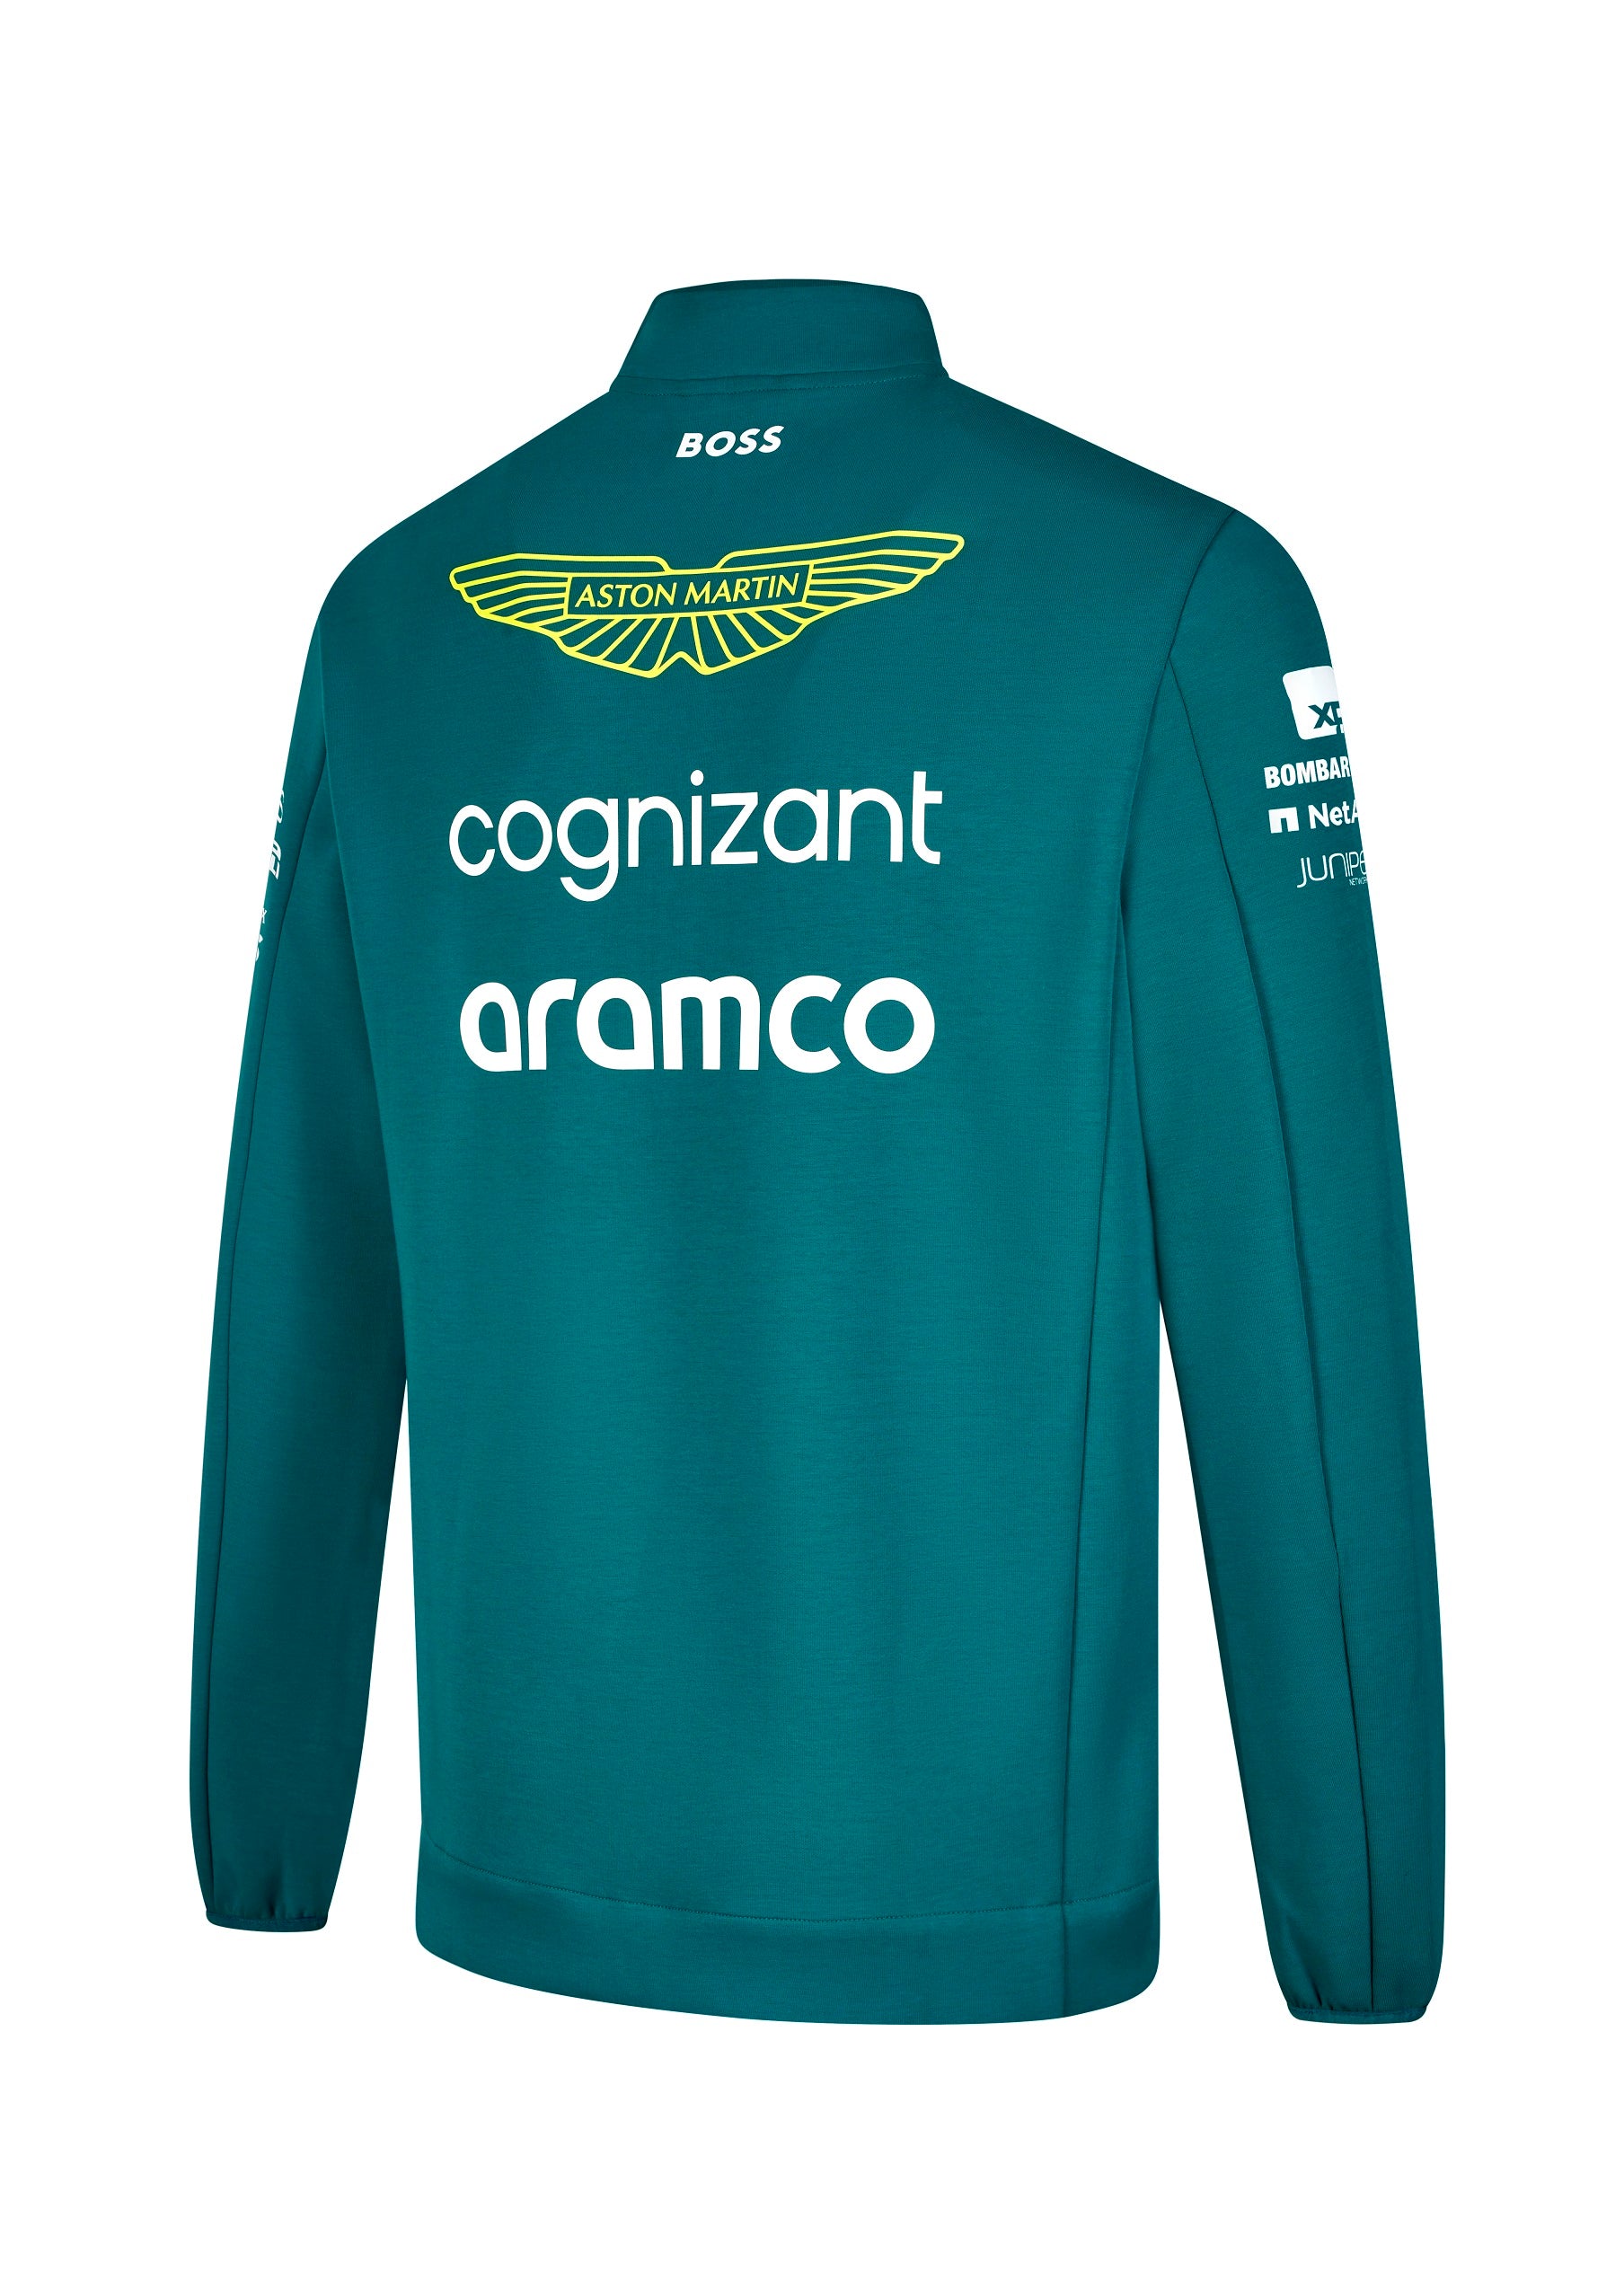 Aston Martin Aramco Cognizant F1 Official Hybrid Jacket